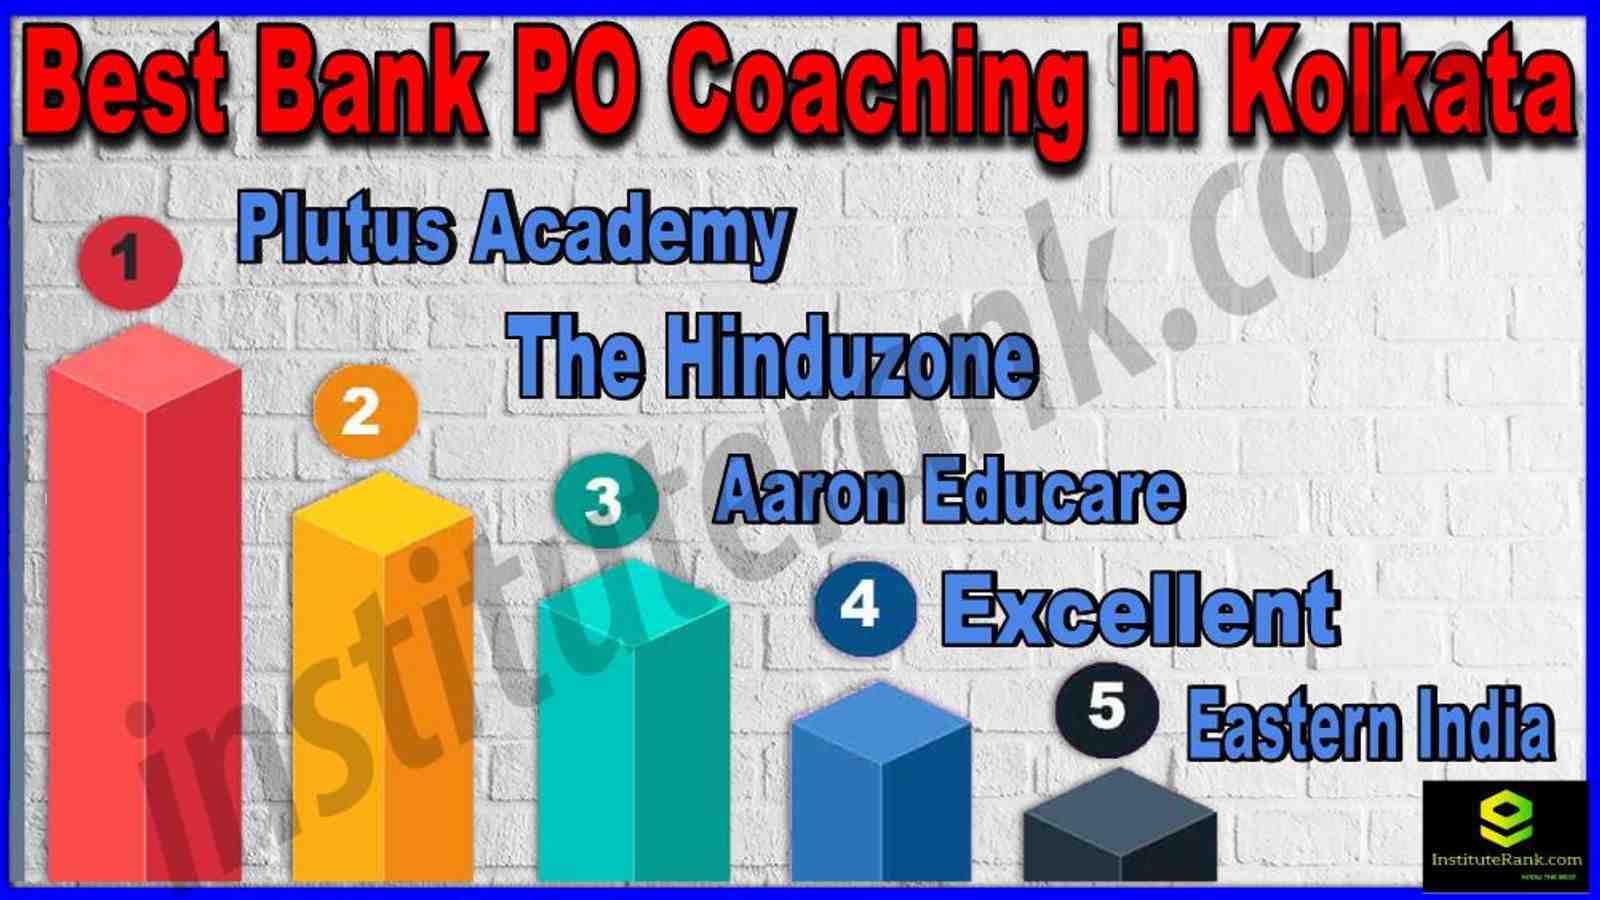 Best Bank PO Coachng in Kolkata